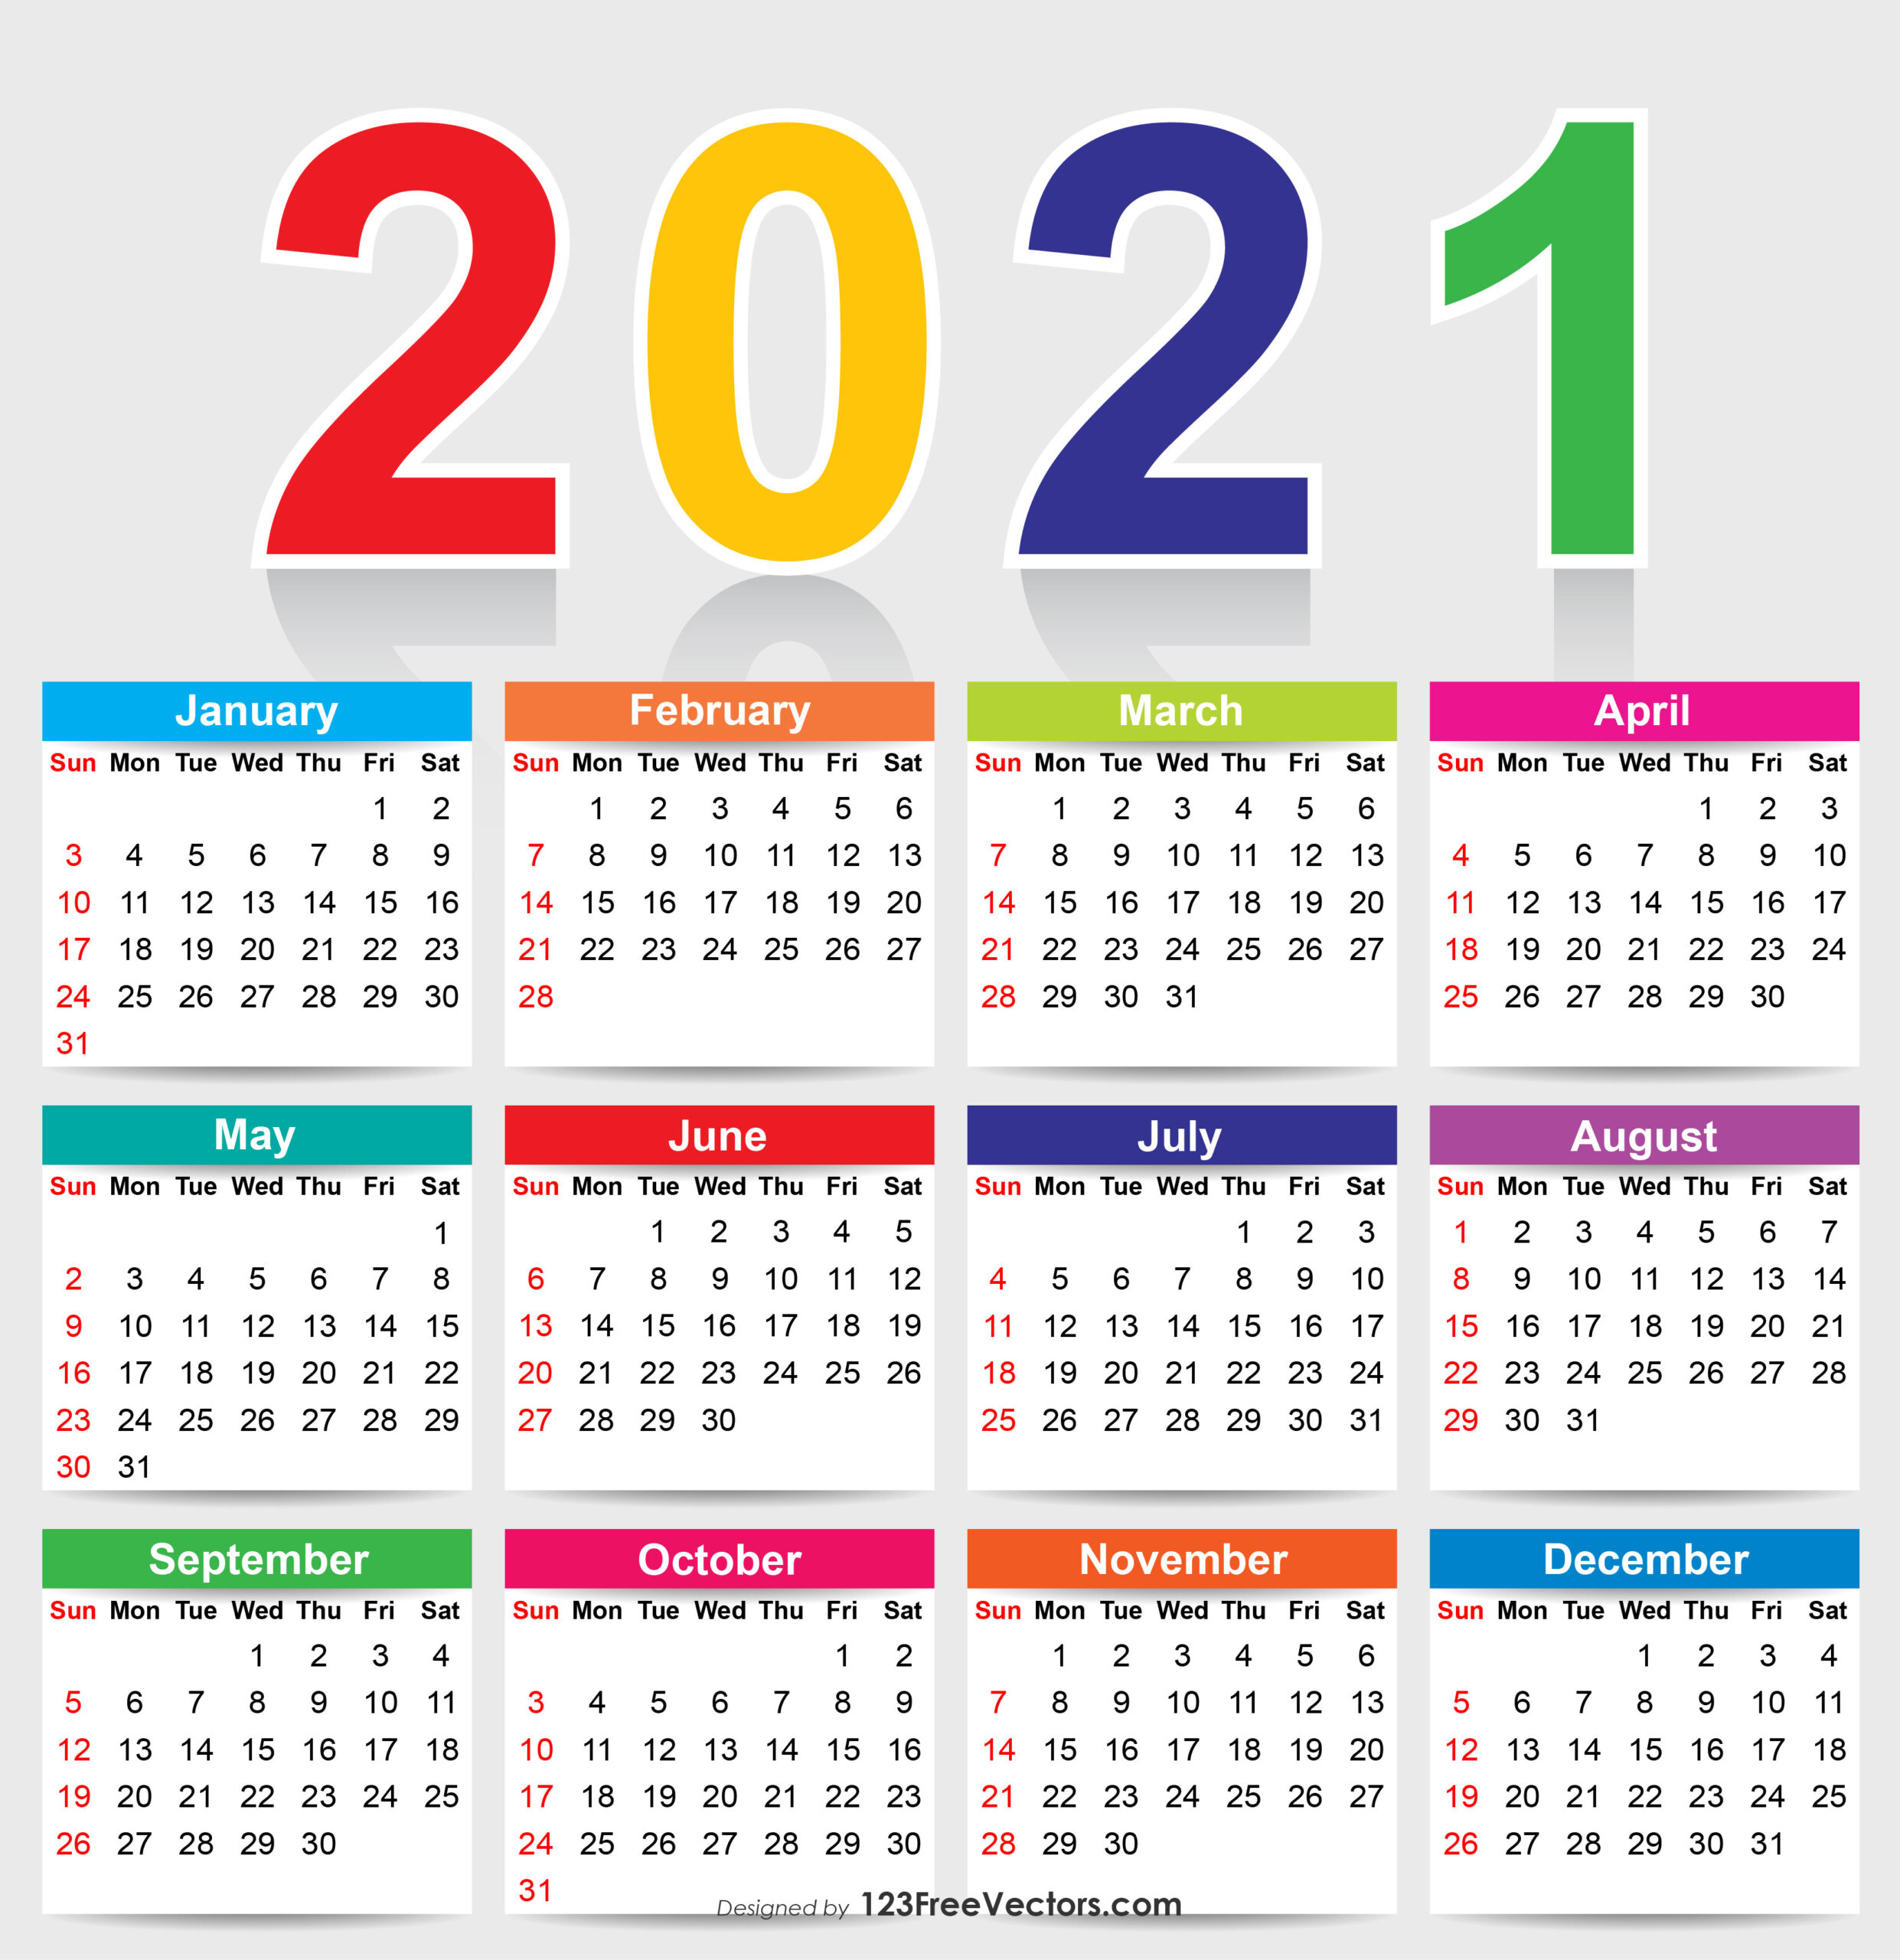 2022 Calendar Psd File Download | September 2022 Calendar-Calendar 2022 Vector Free Download